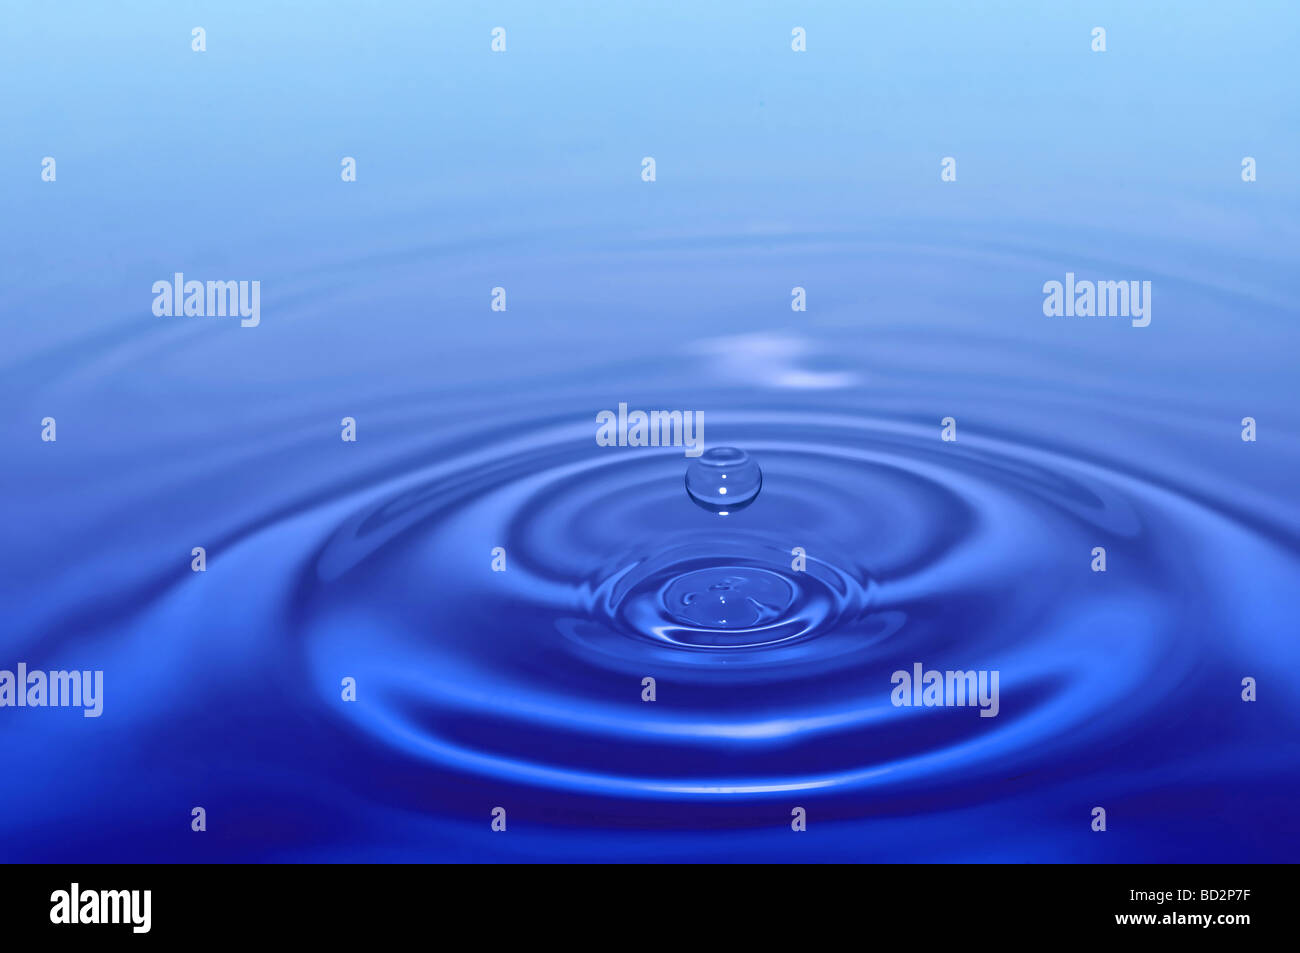 splash water drop for concept design Stock Photo